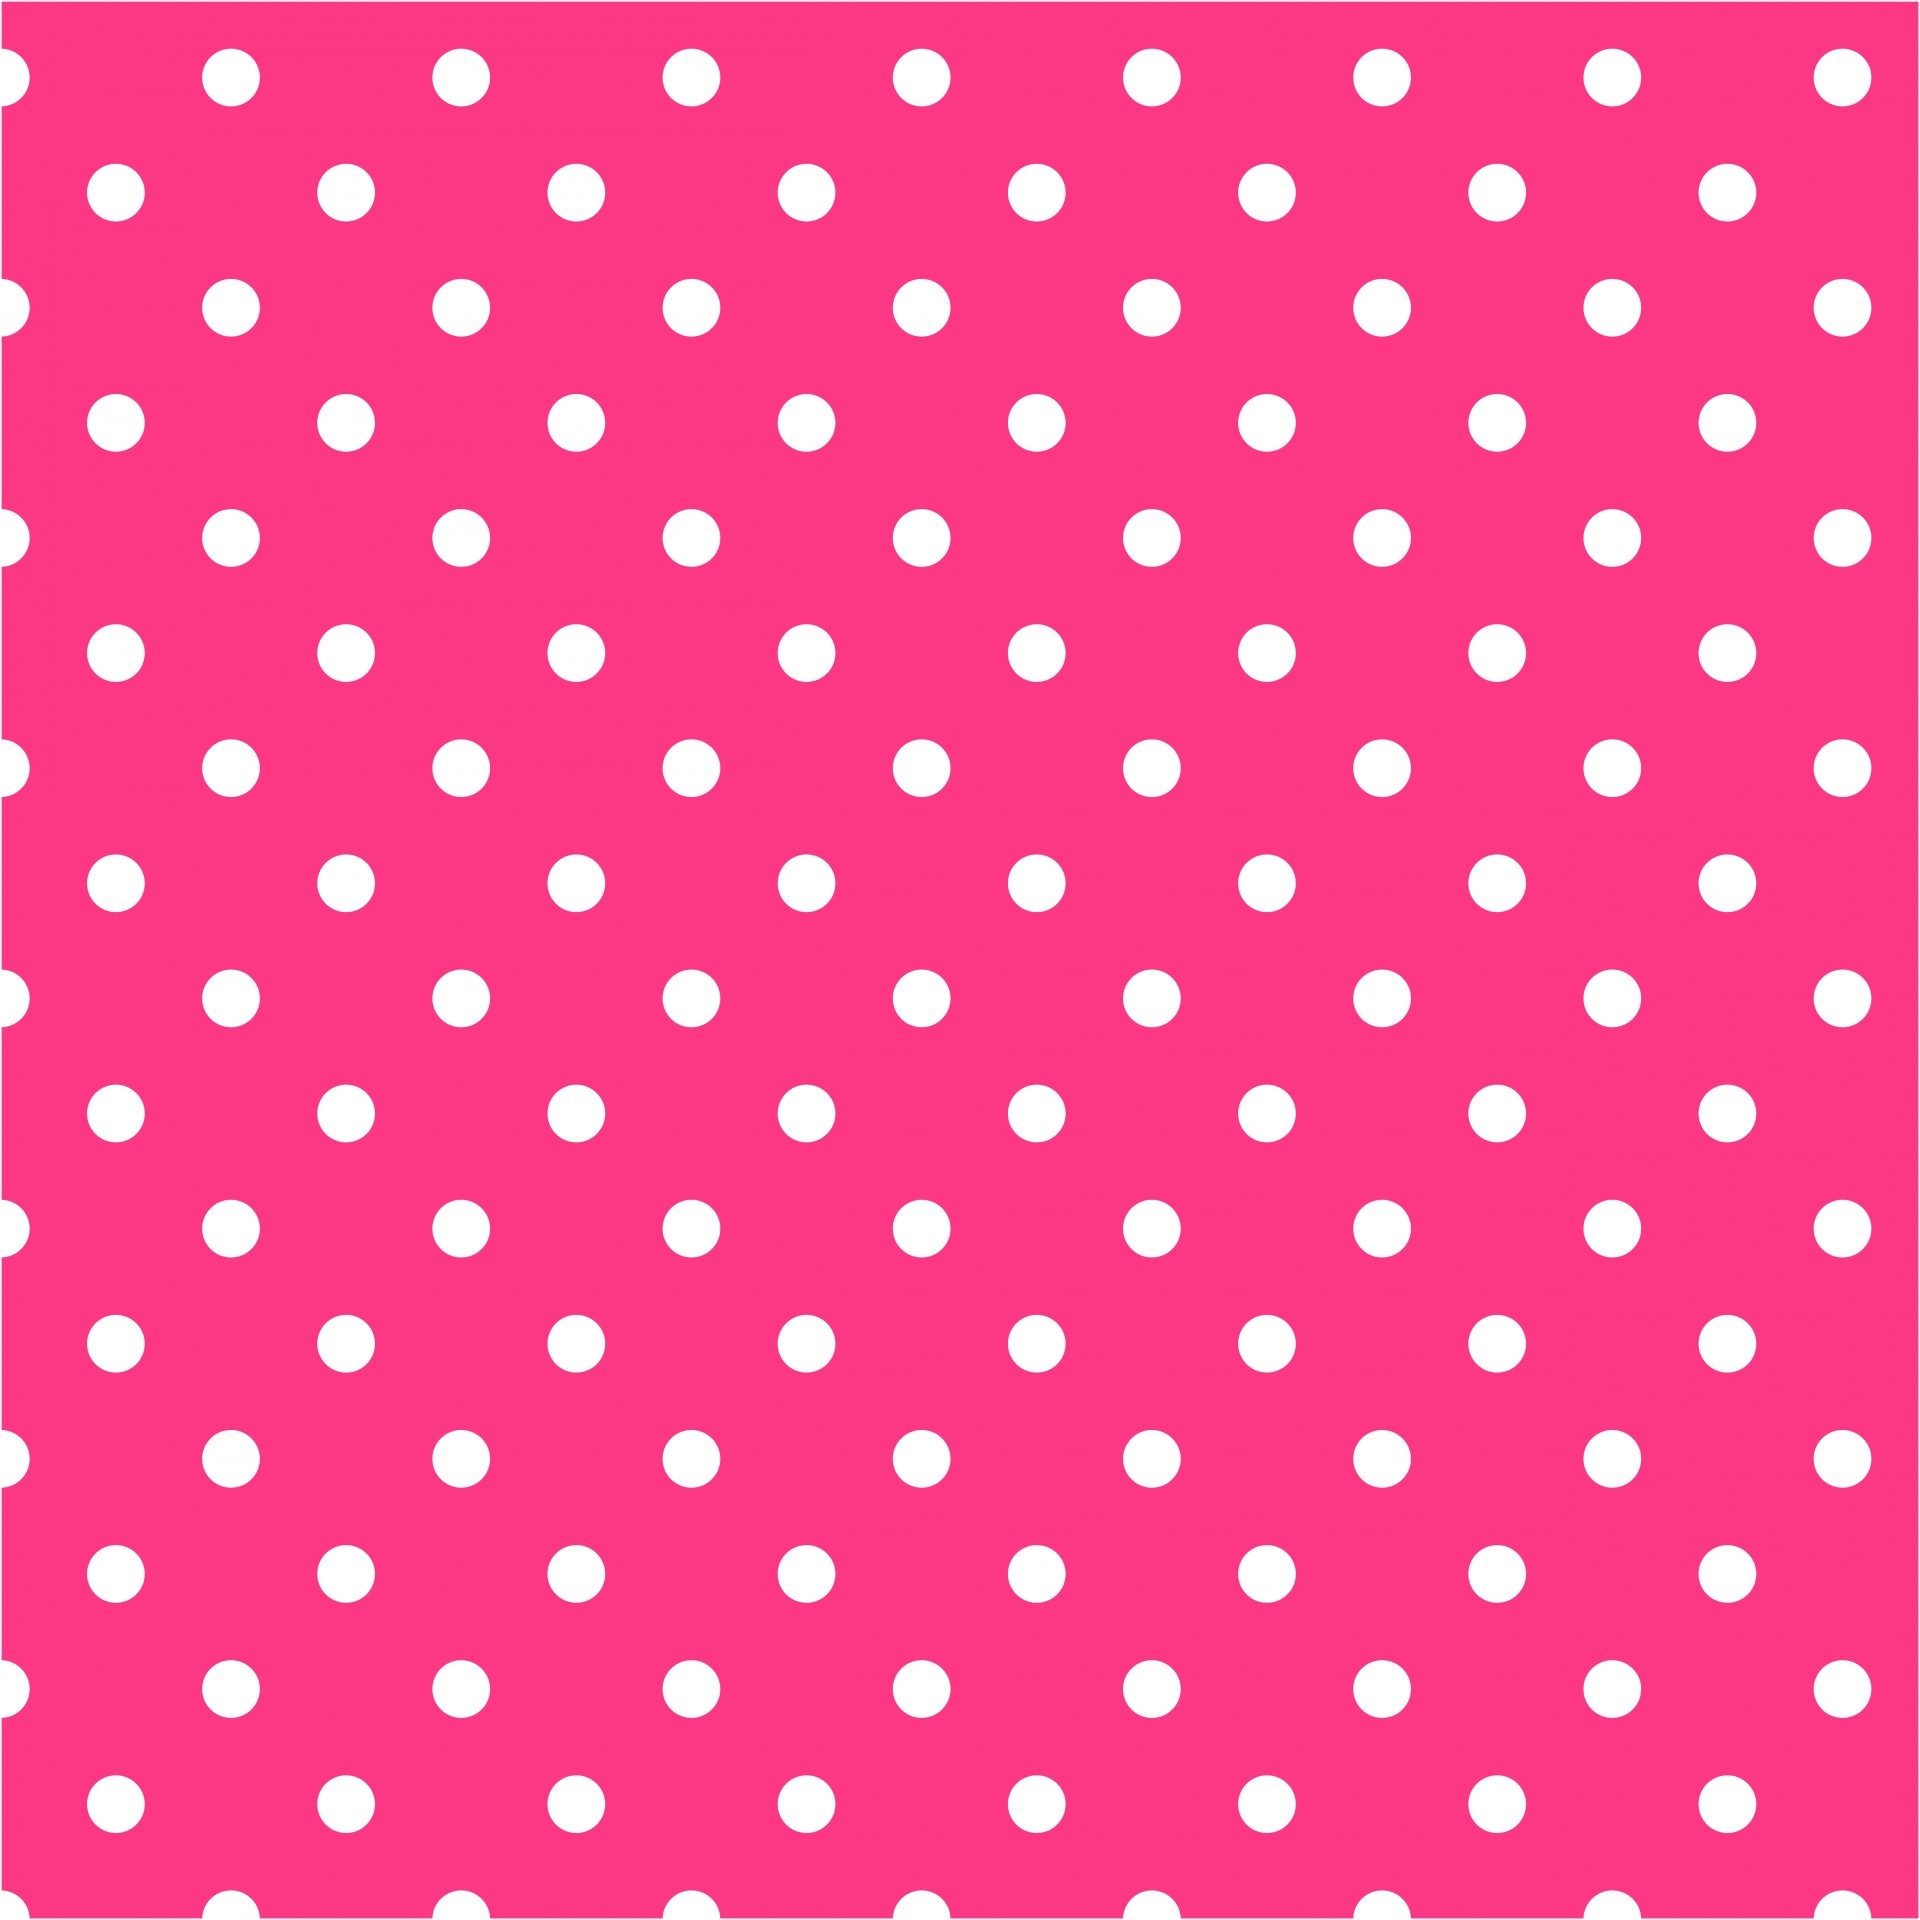 Polka Dot Wallpaper Pink